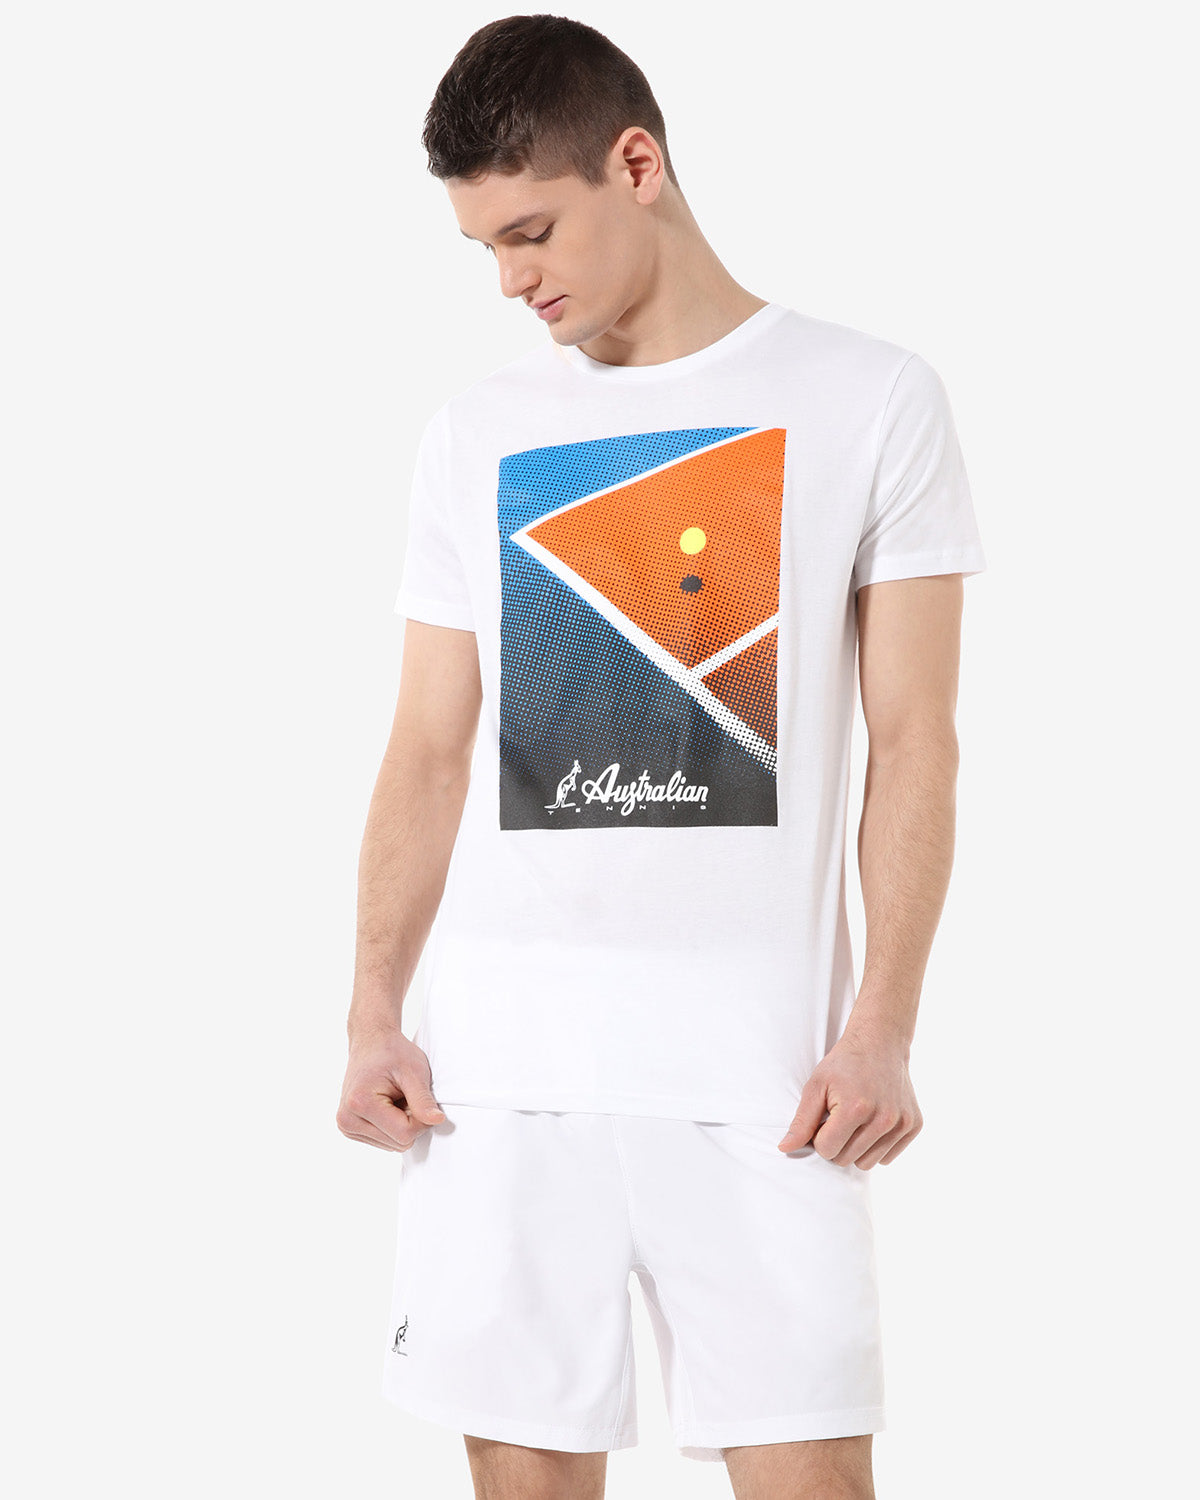 Court Graphic T-shirt: Australian Tennis